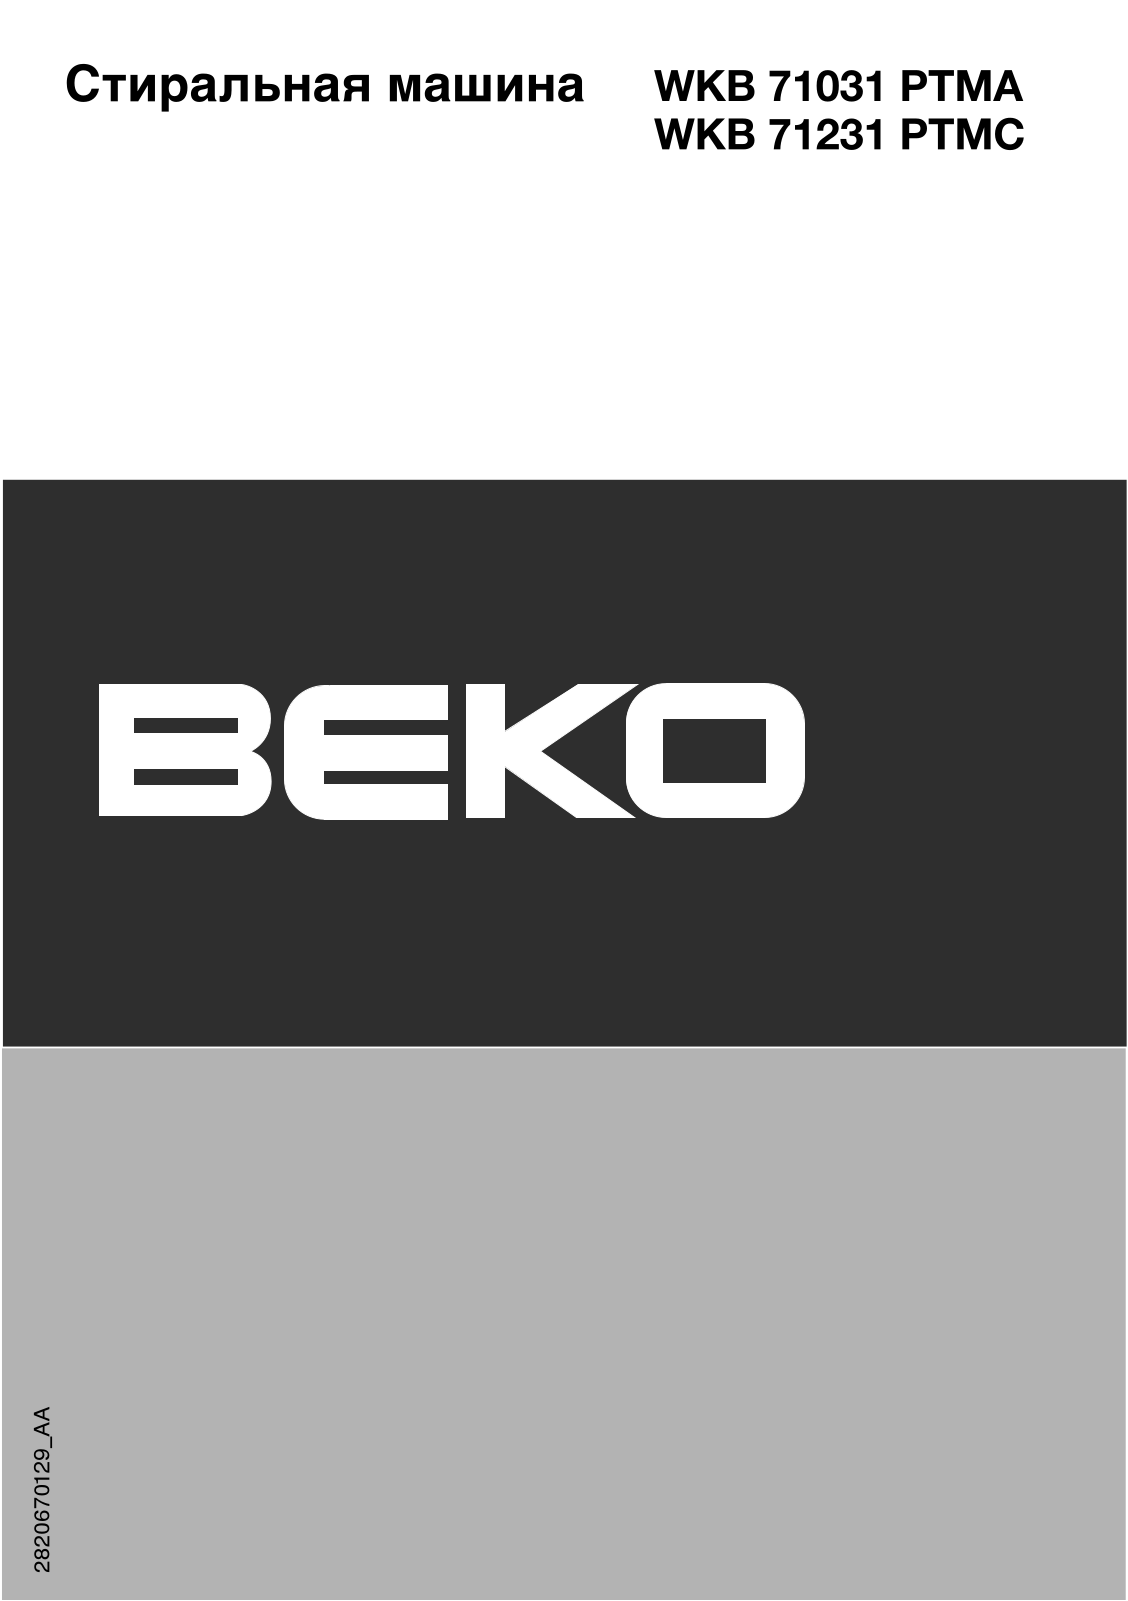 Beko WKB 71231 PTMC User Manual